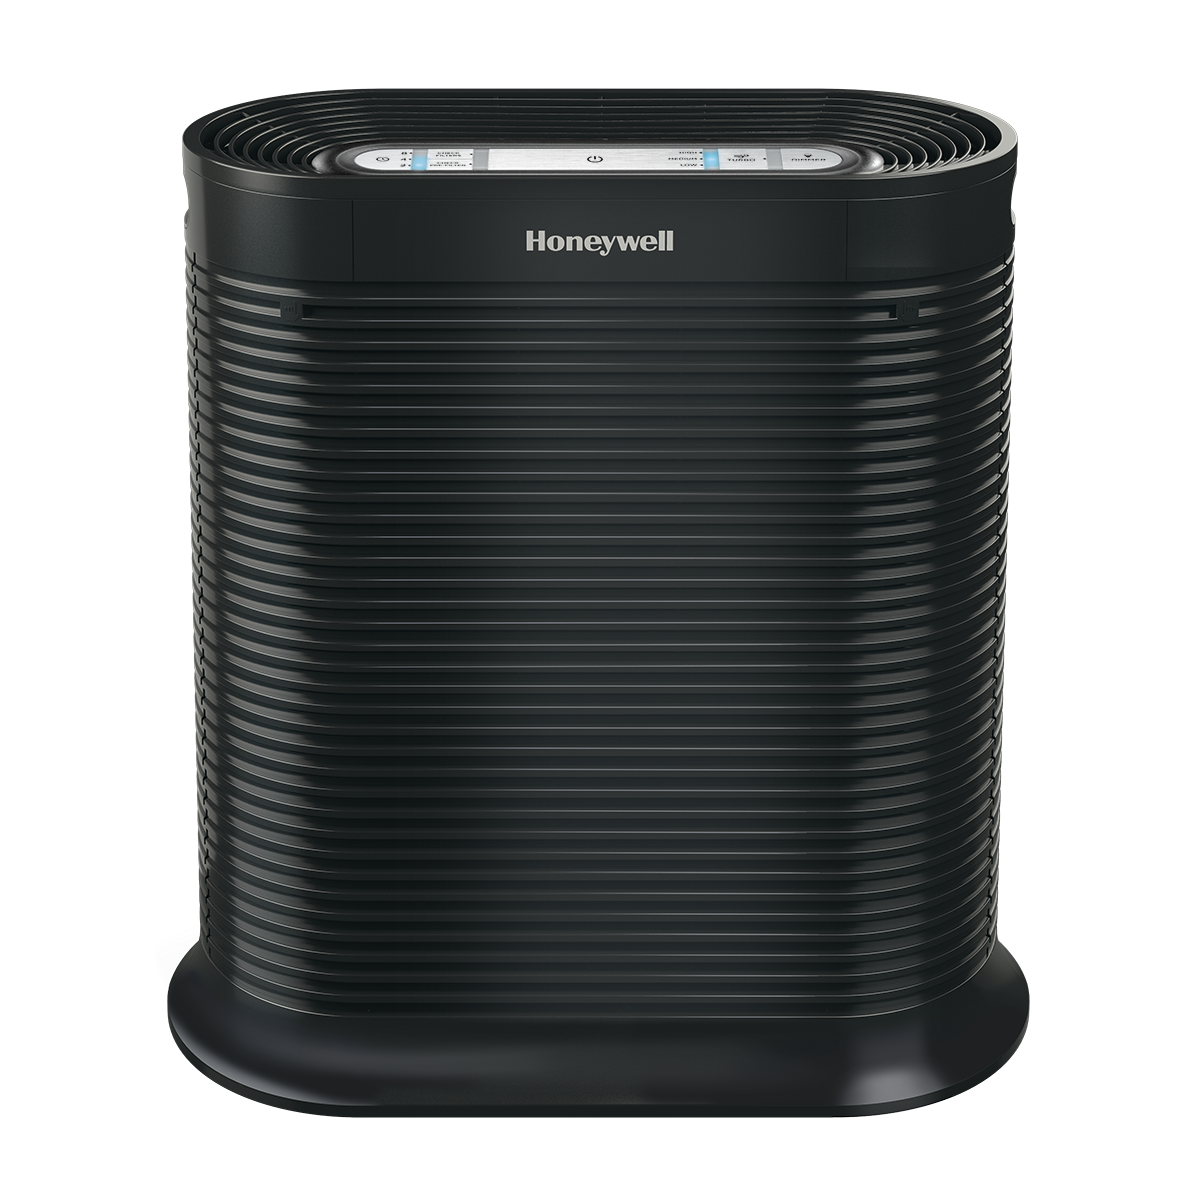 Honeywell Air Purifier, HPA300, 465 sq ft, HEPA Filter, Allergen, Smoke, Pollen, Dust Reducer - image 3 of 13